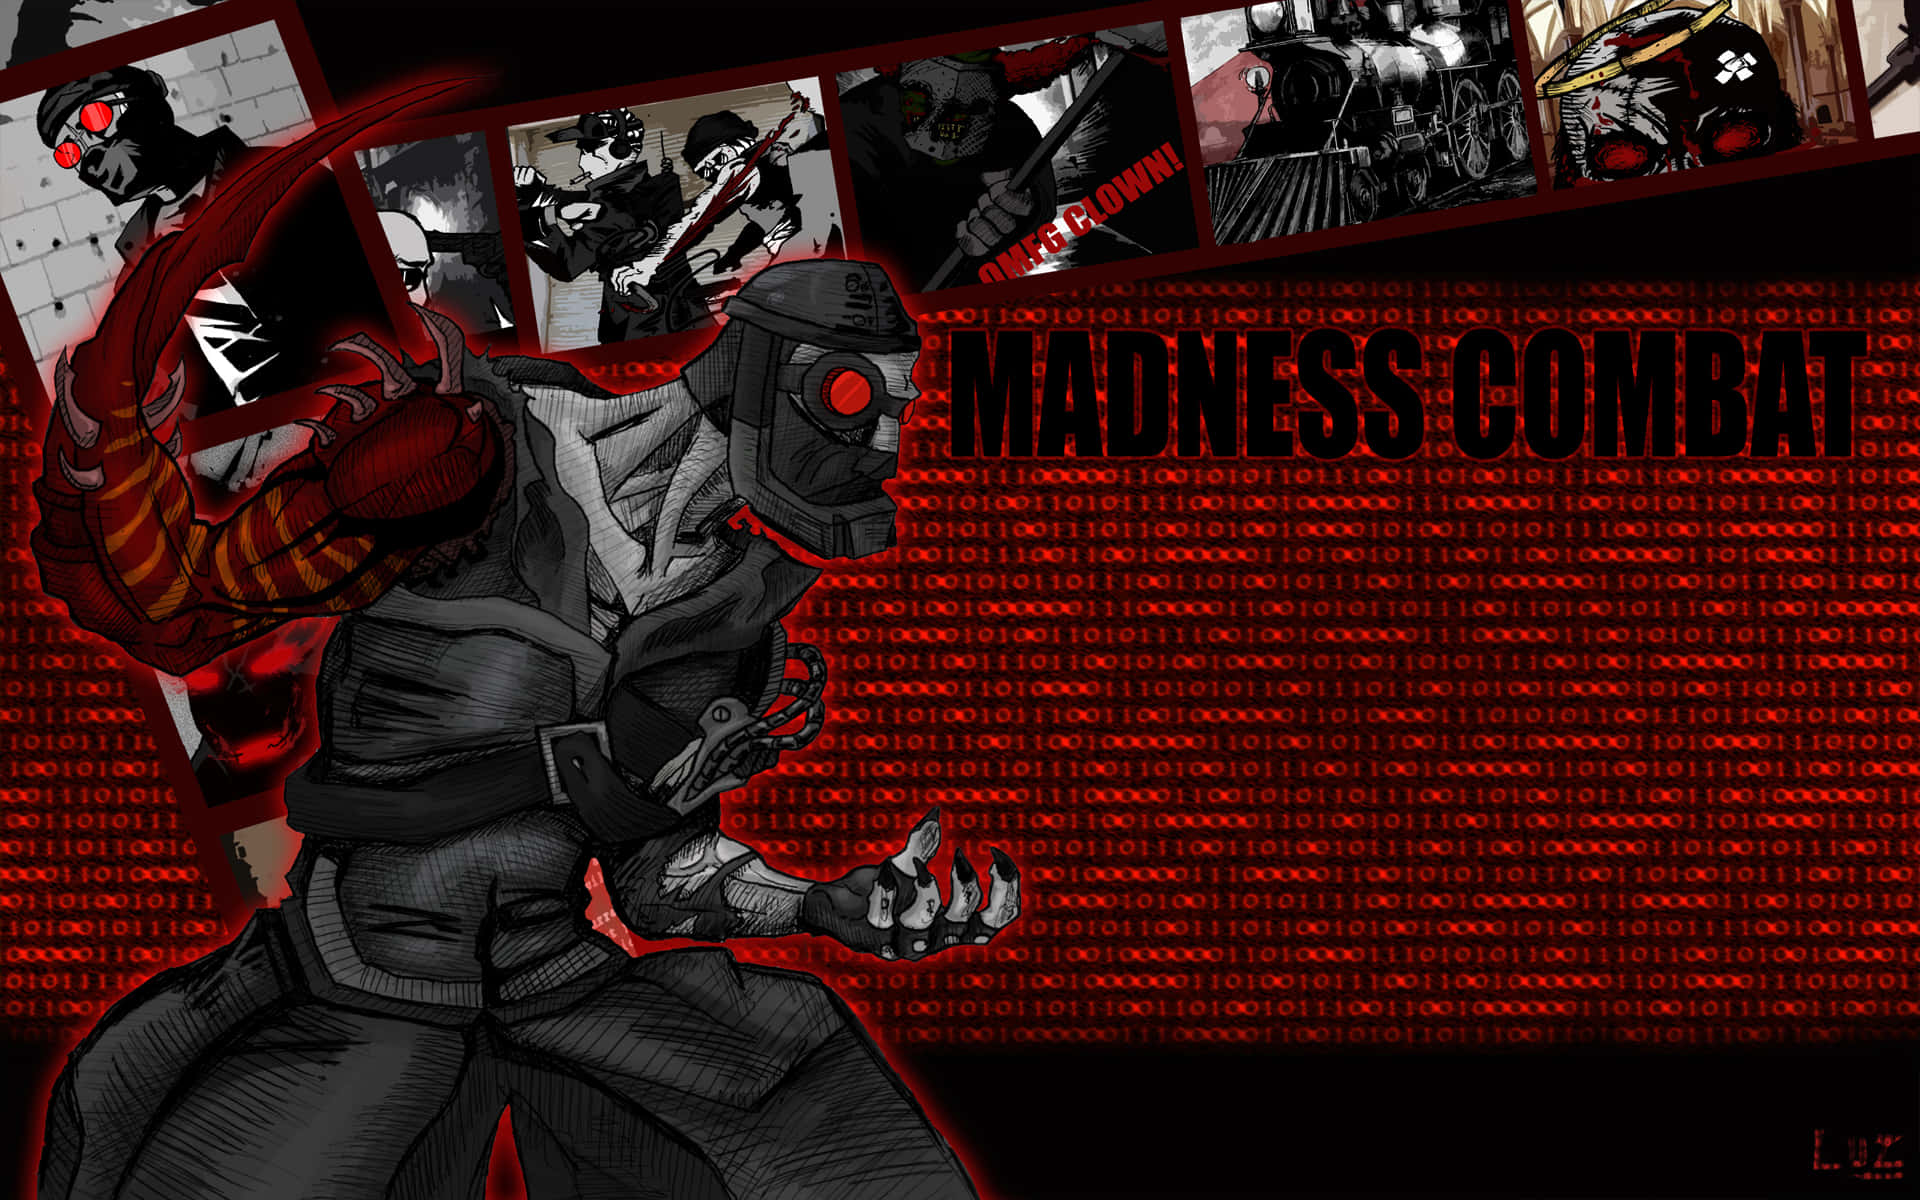 Fondode Pantalla De Madness Combat, Un Videojuego Intenso.